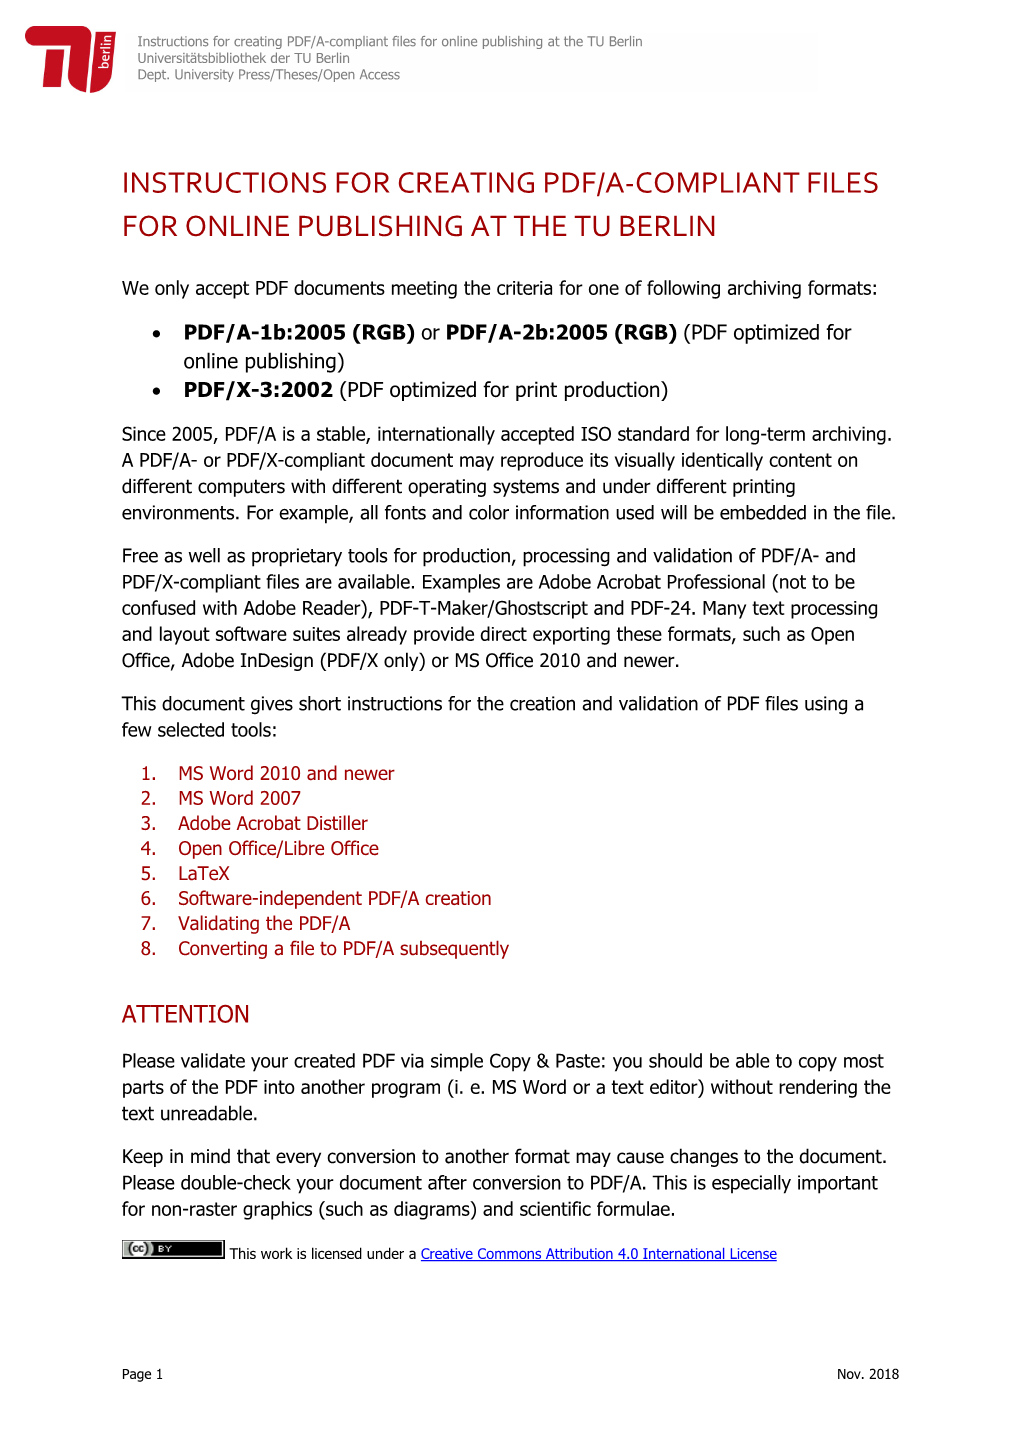 Instructions for Creating PDF/A-Compliant Files for Online Publishing at the TU Berlin Universitätsbibliothek Der TU Berlin Dept